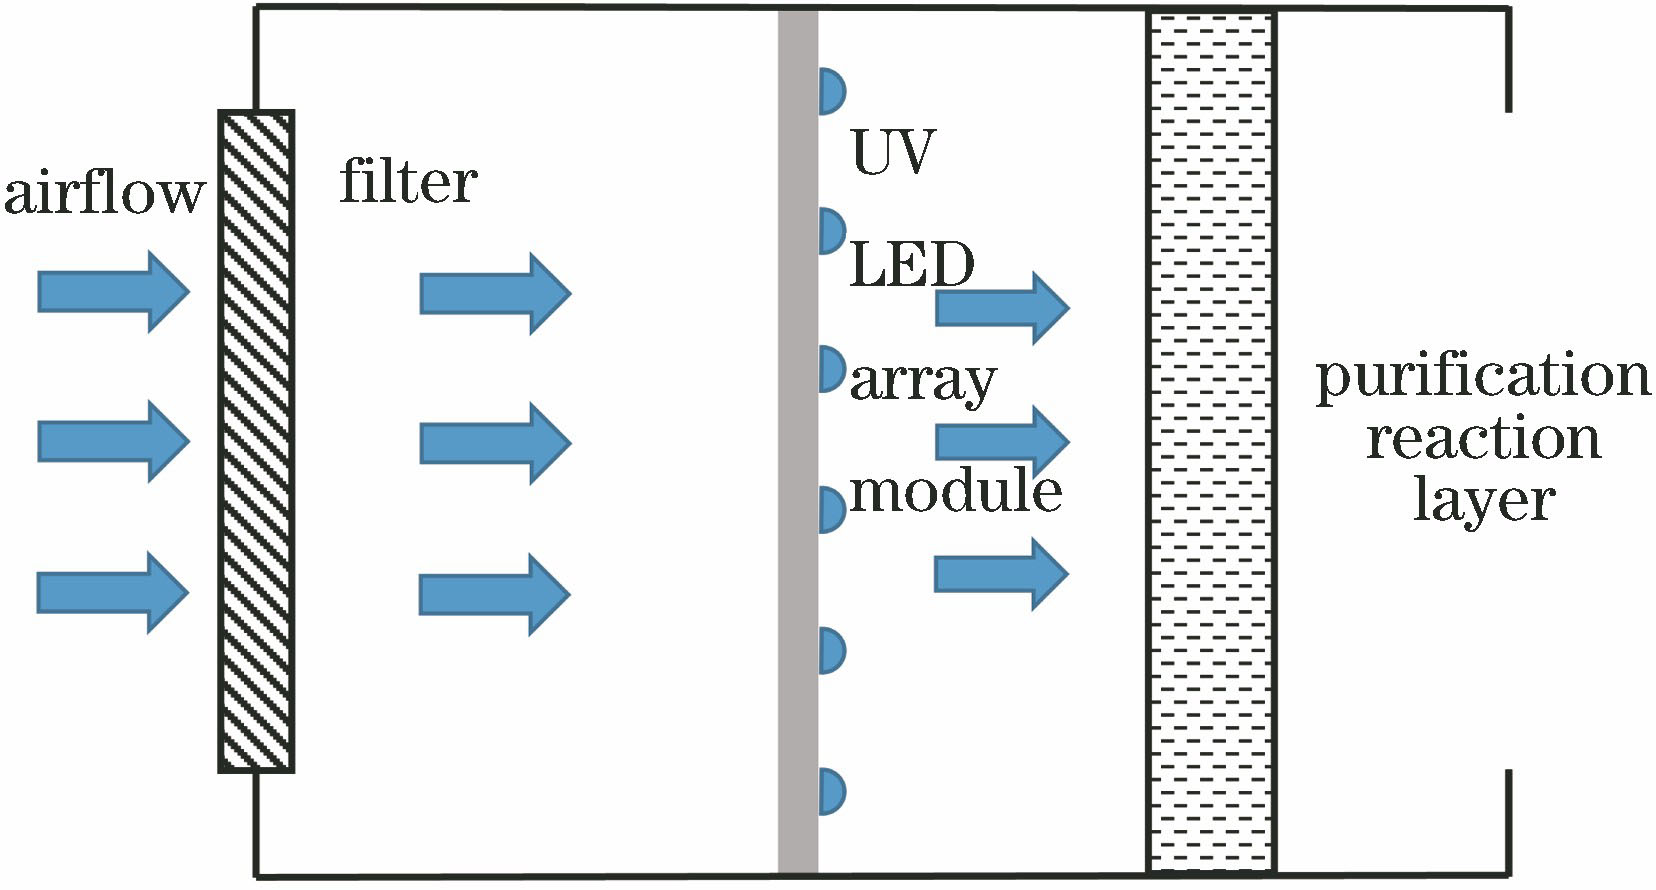 UV light purification system structure